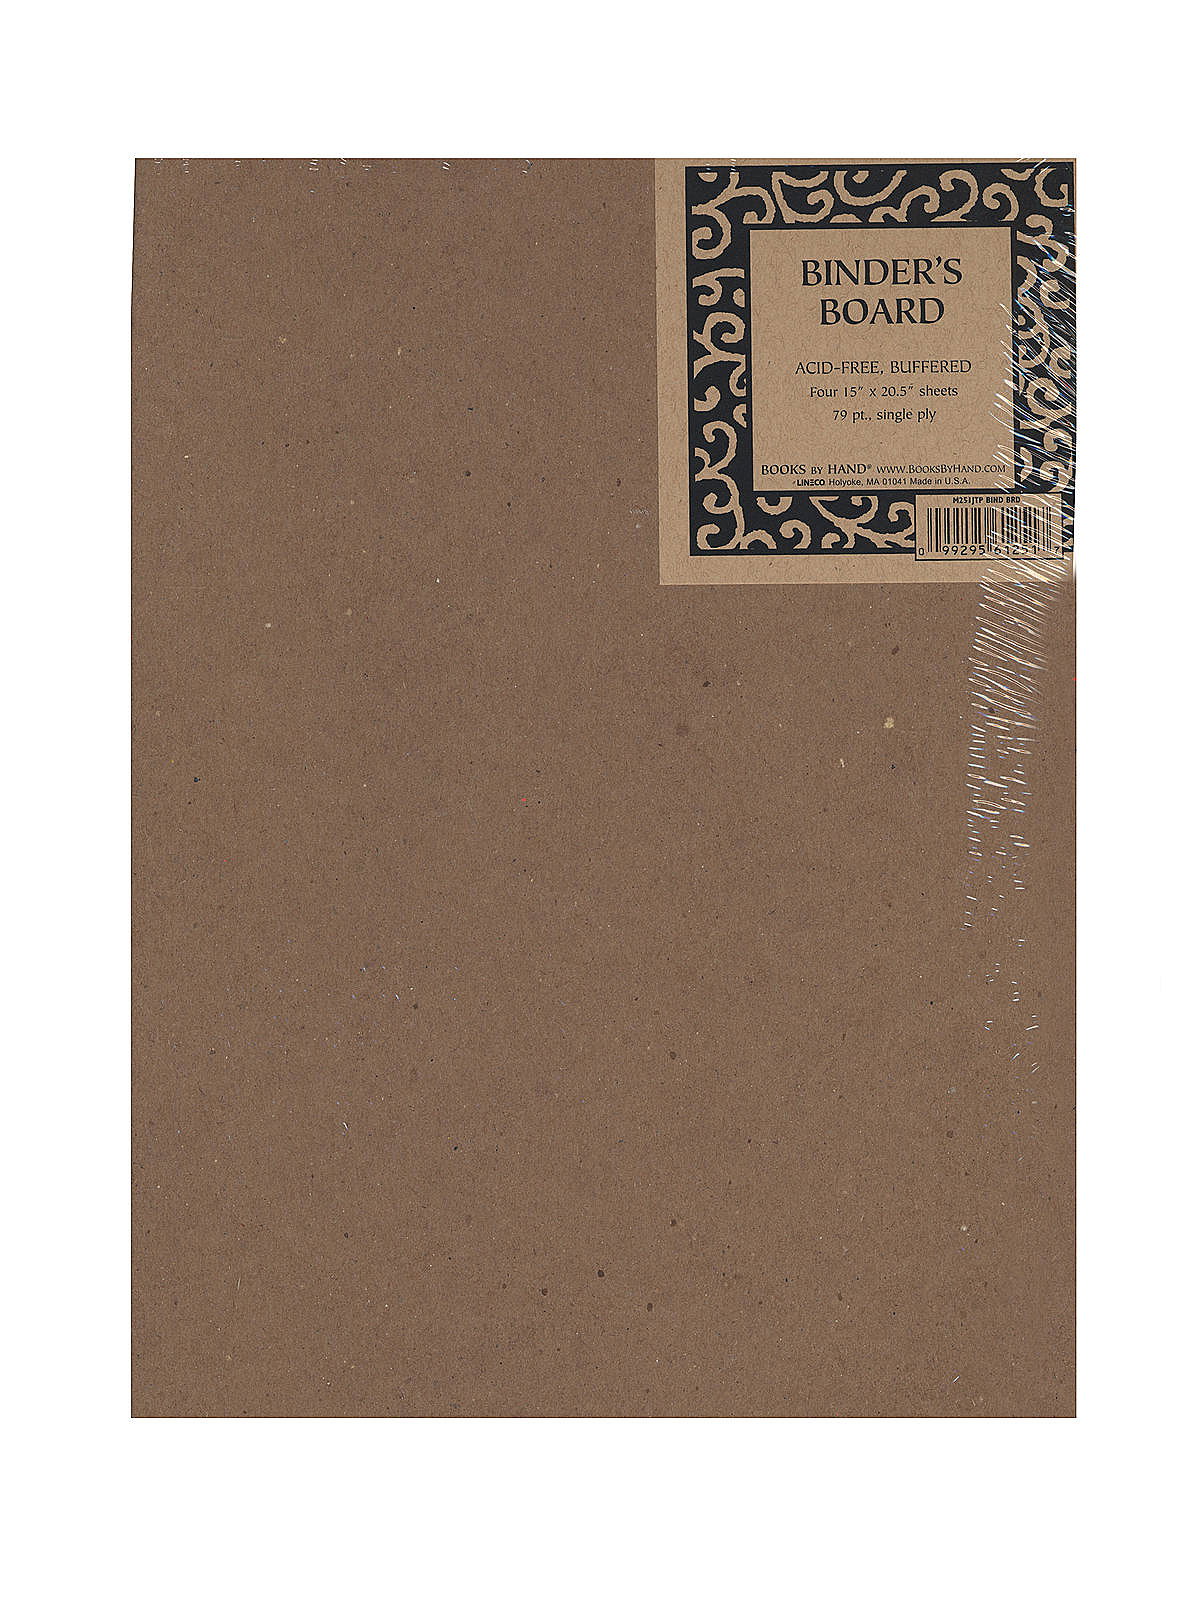 29 x 41 Unbuffered .098 Davey Binder Board (15-Pack), Boards & Paper, Conservation Supplies, Preservation